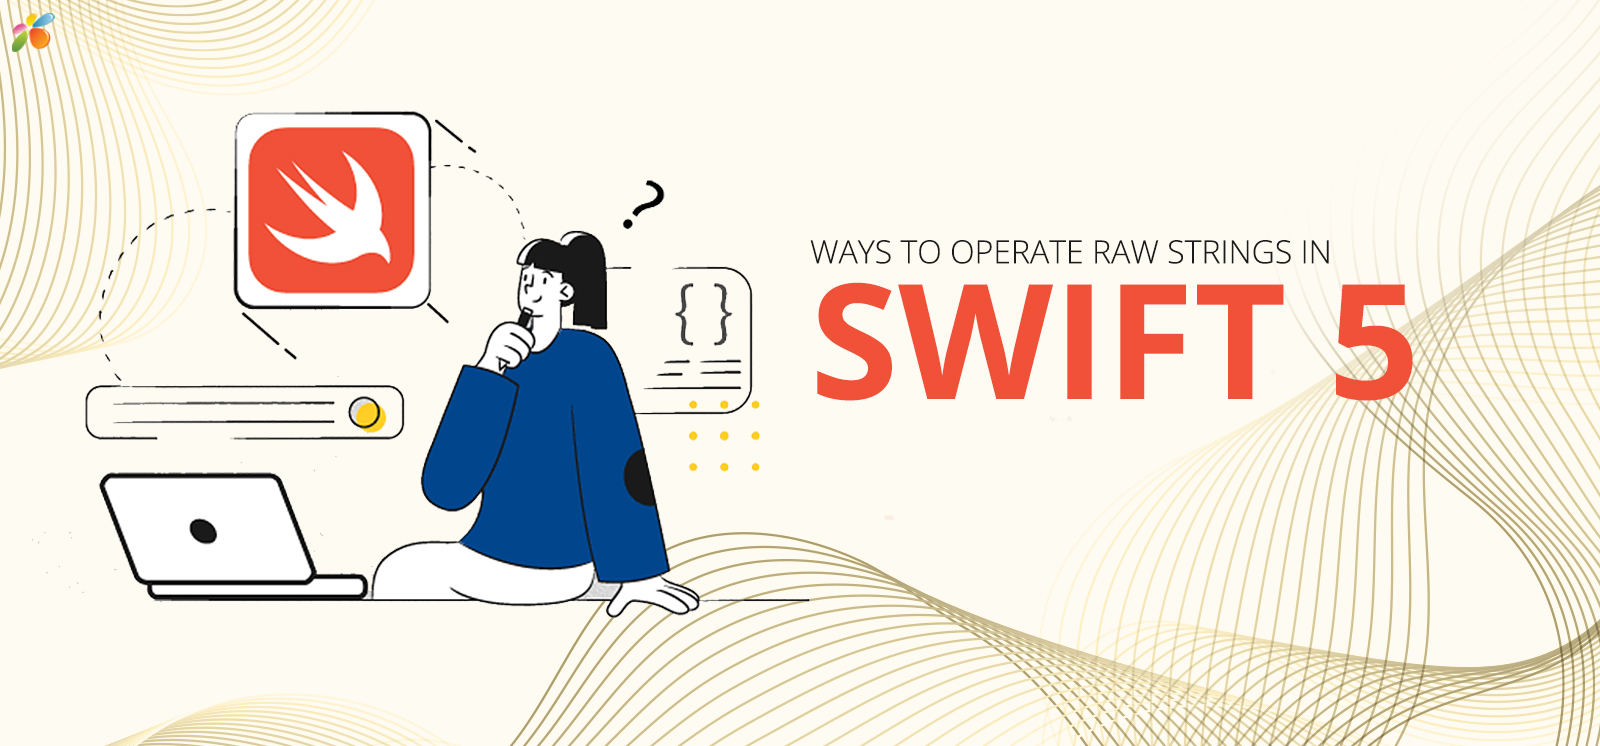 Ways to operate raw strings in Swift 5, iOS app development